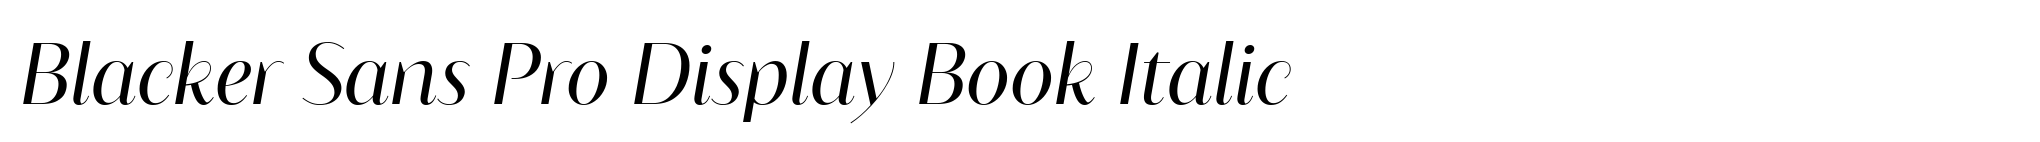 Blacker Sans Pro Display Book Italic image